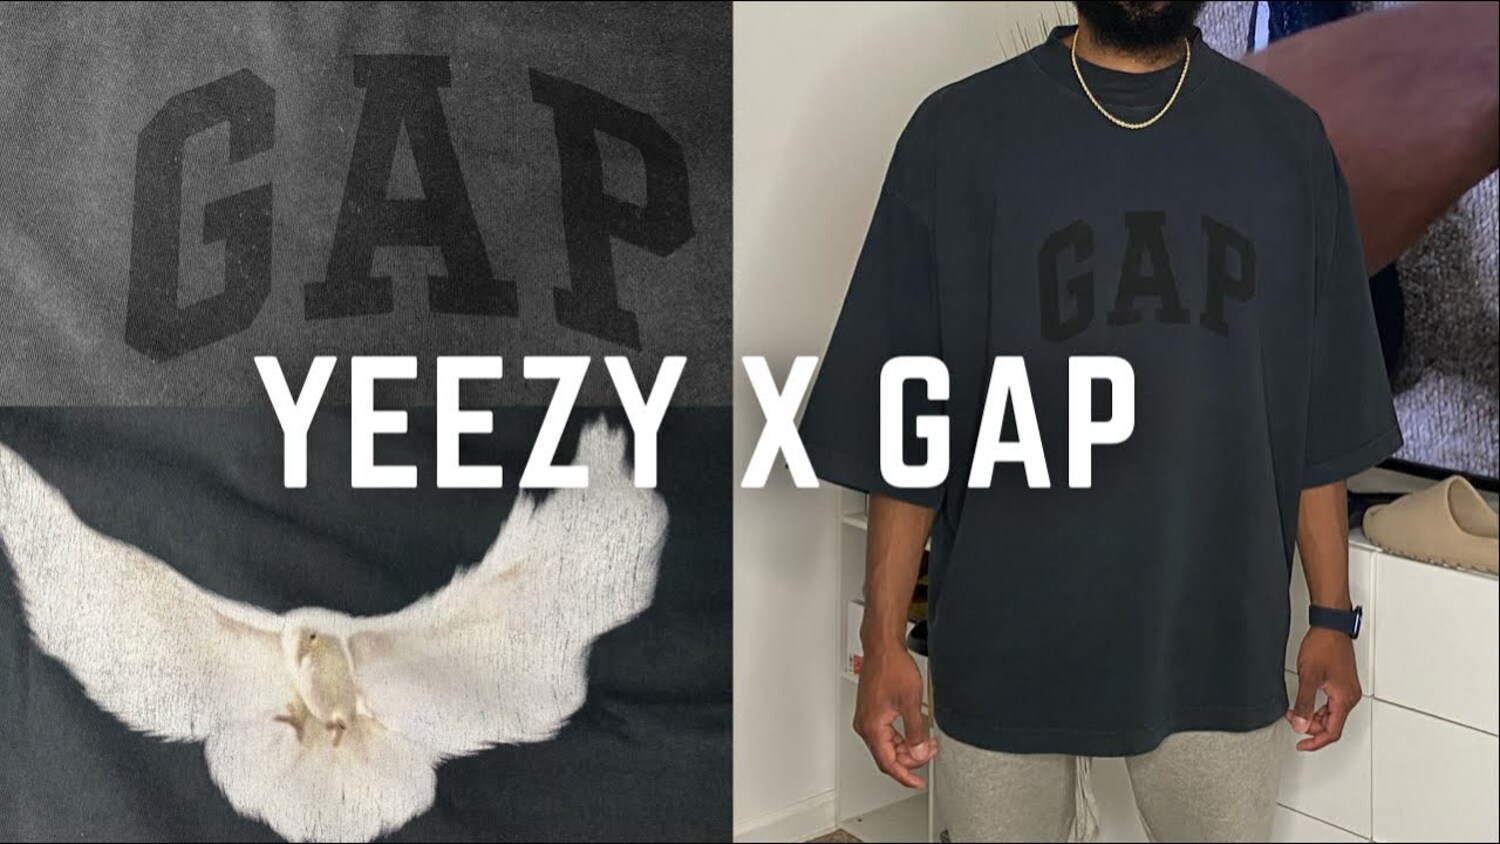 Yeezy and gap